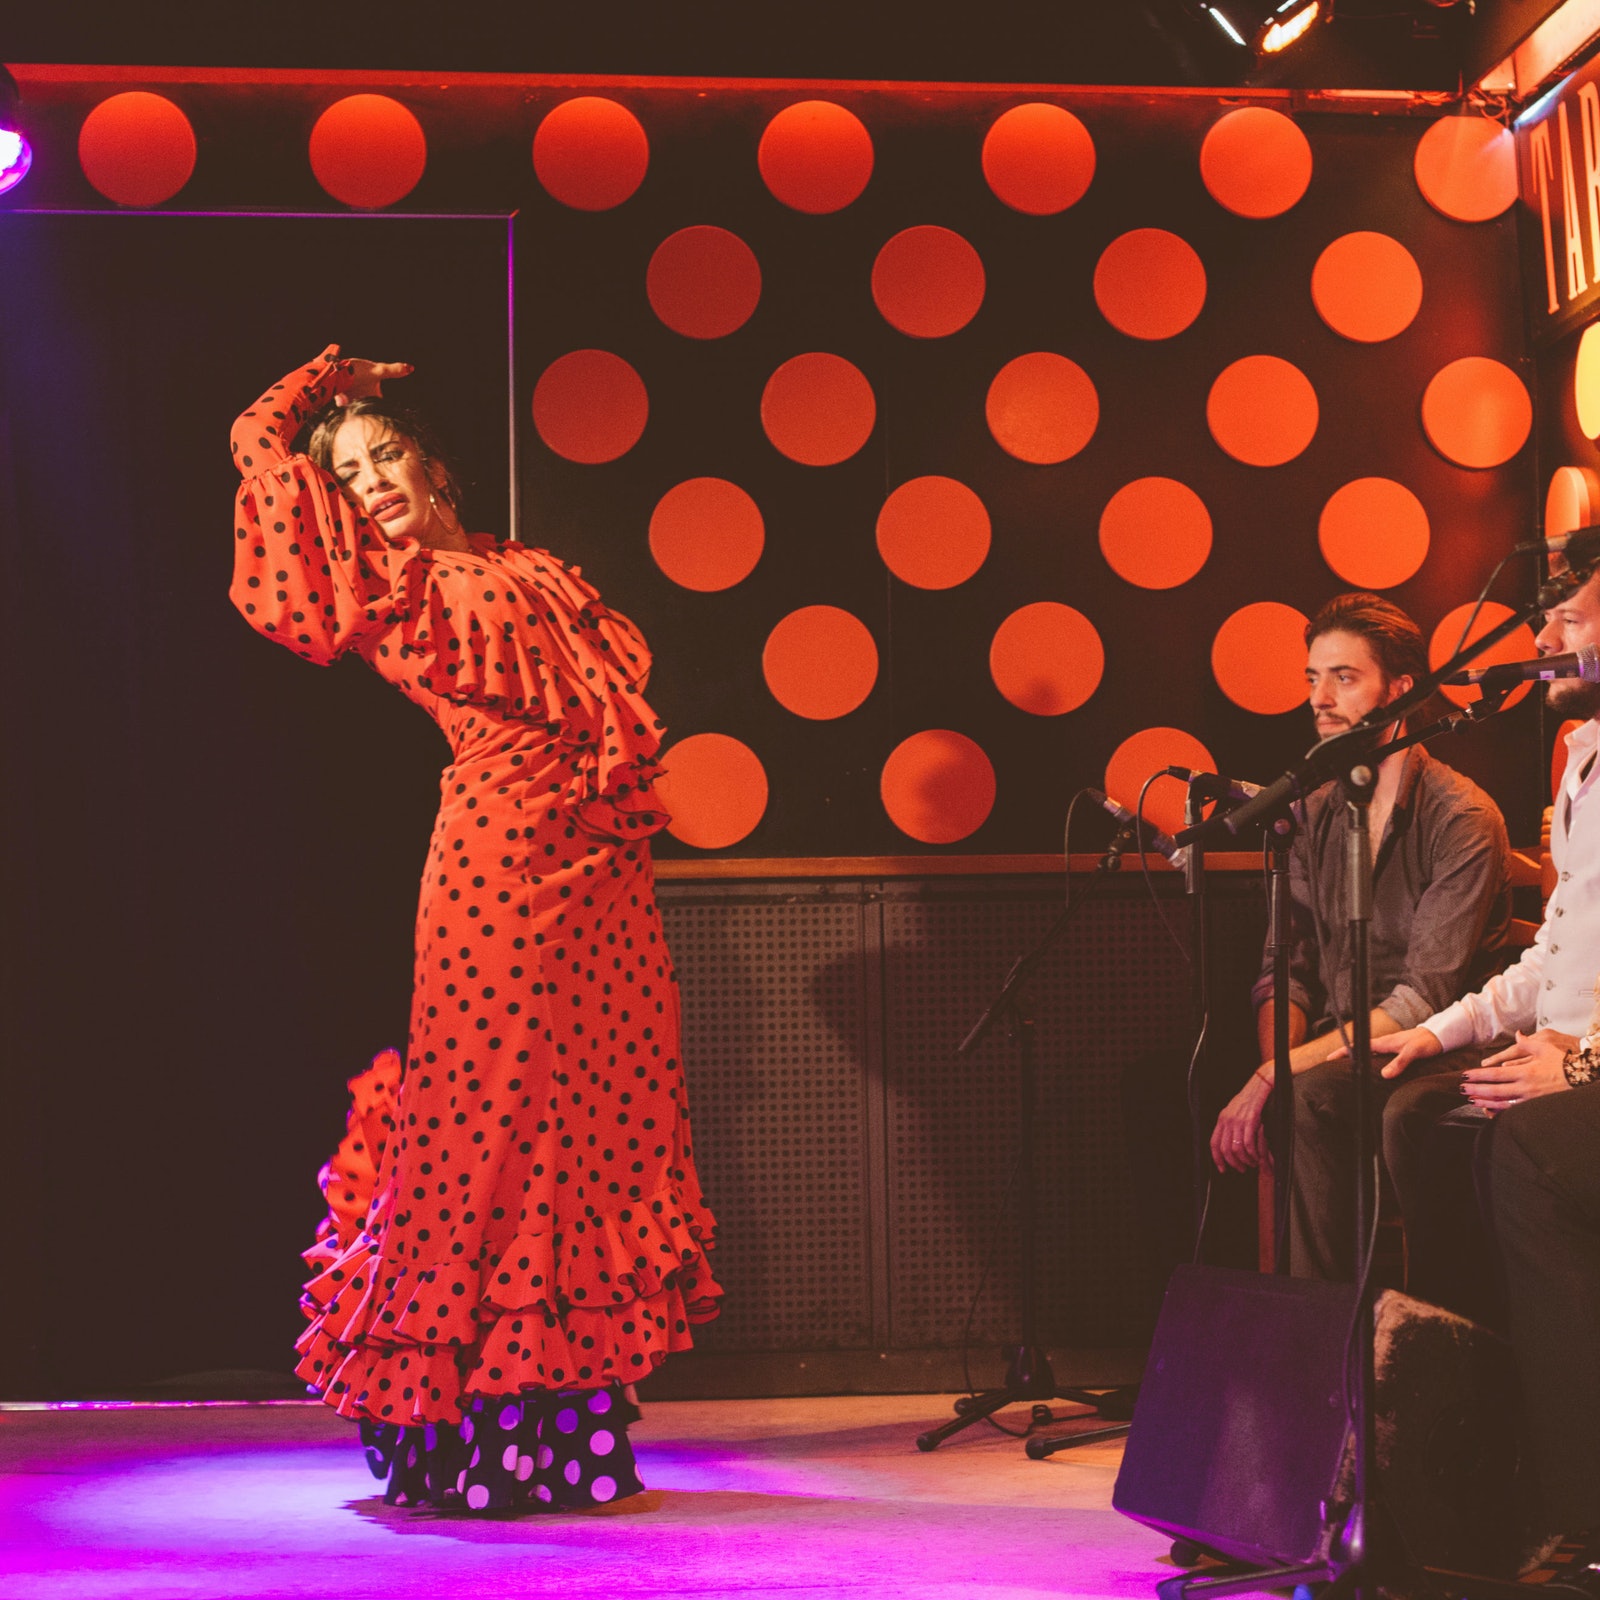 Tarantos Flamenco Show in Spain